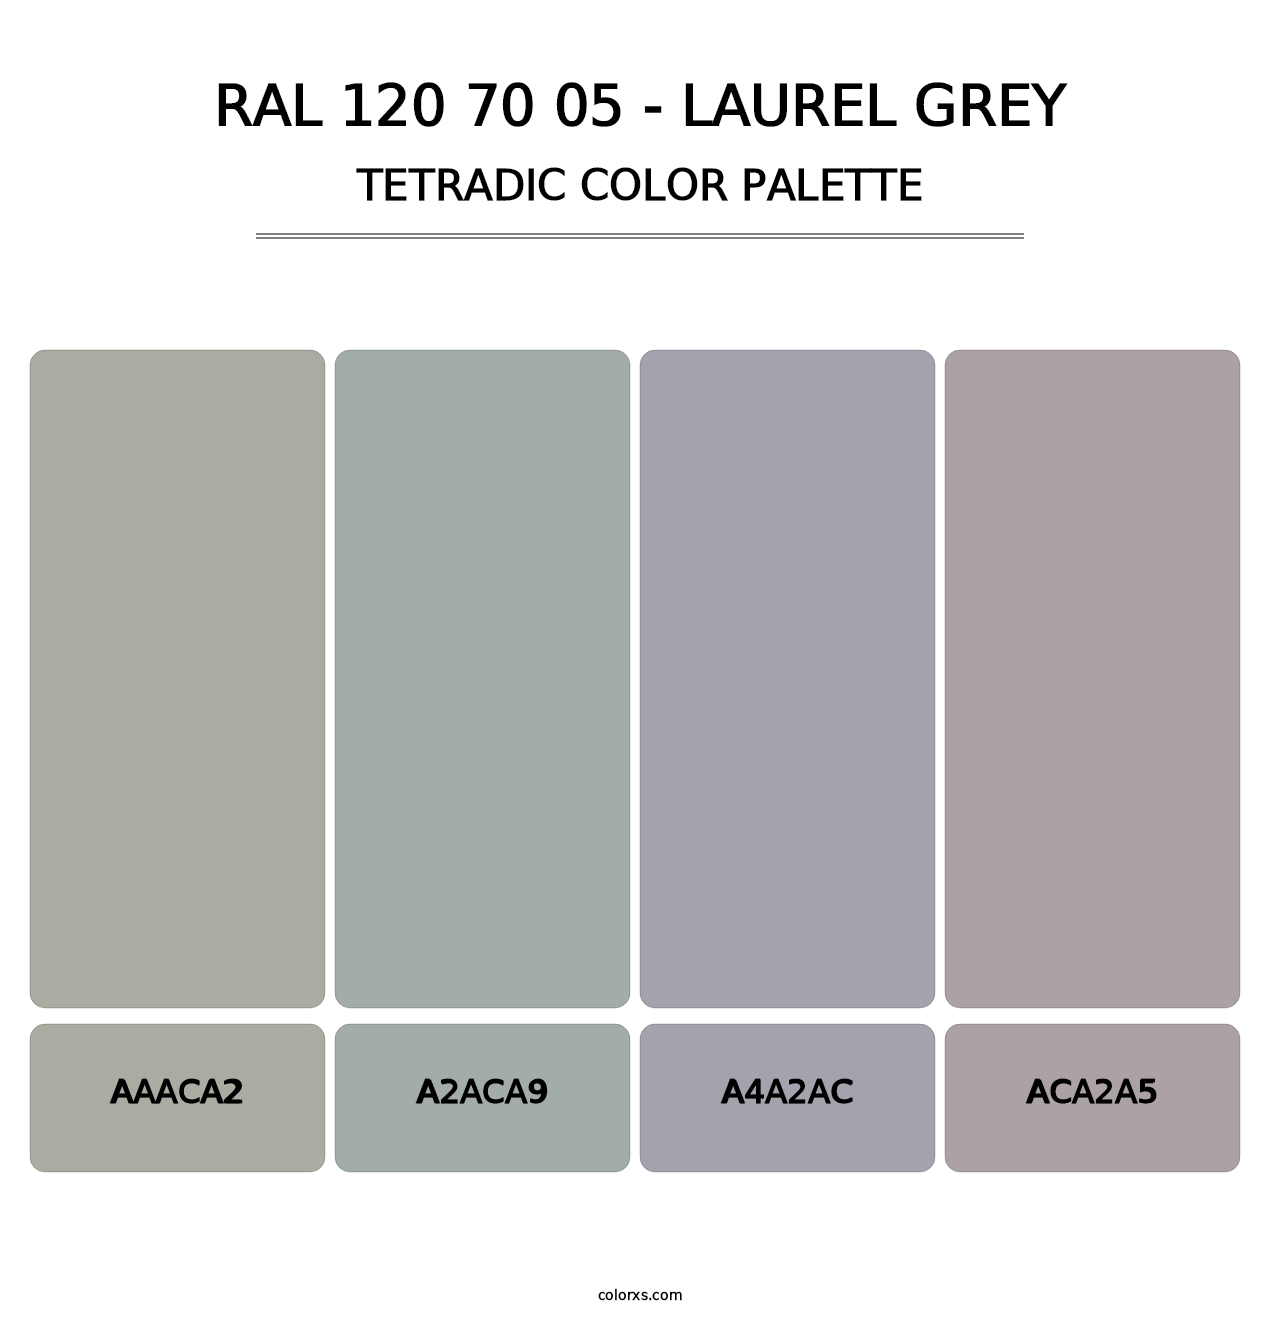 RAL 120 70 05 - Laurel Grey - Tetradic Color Palette